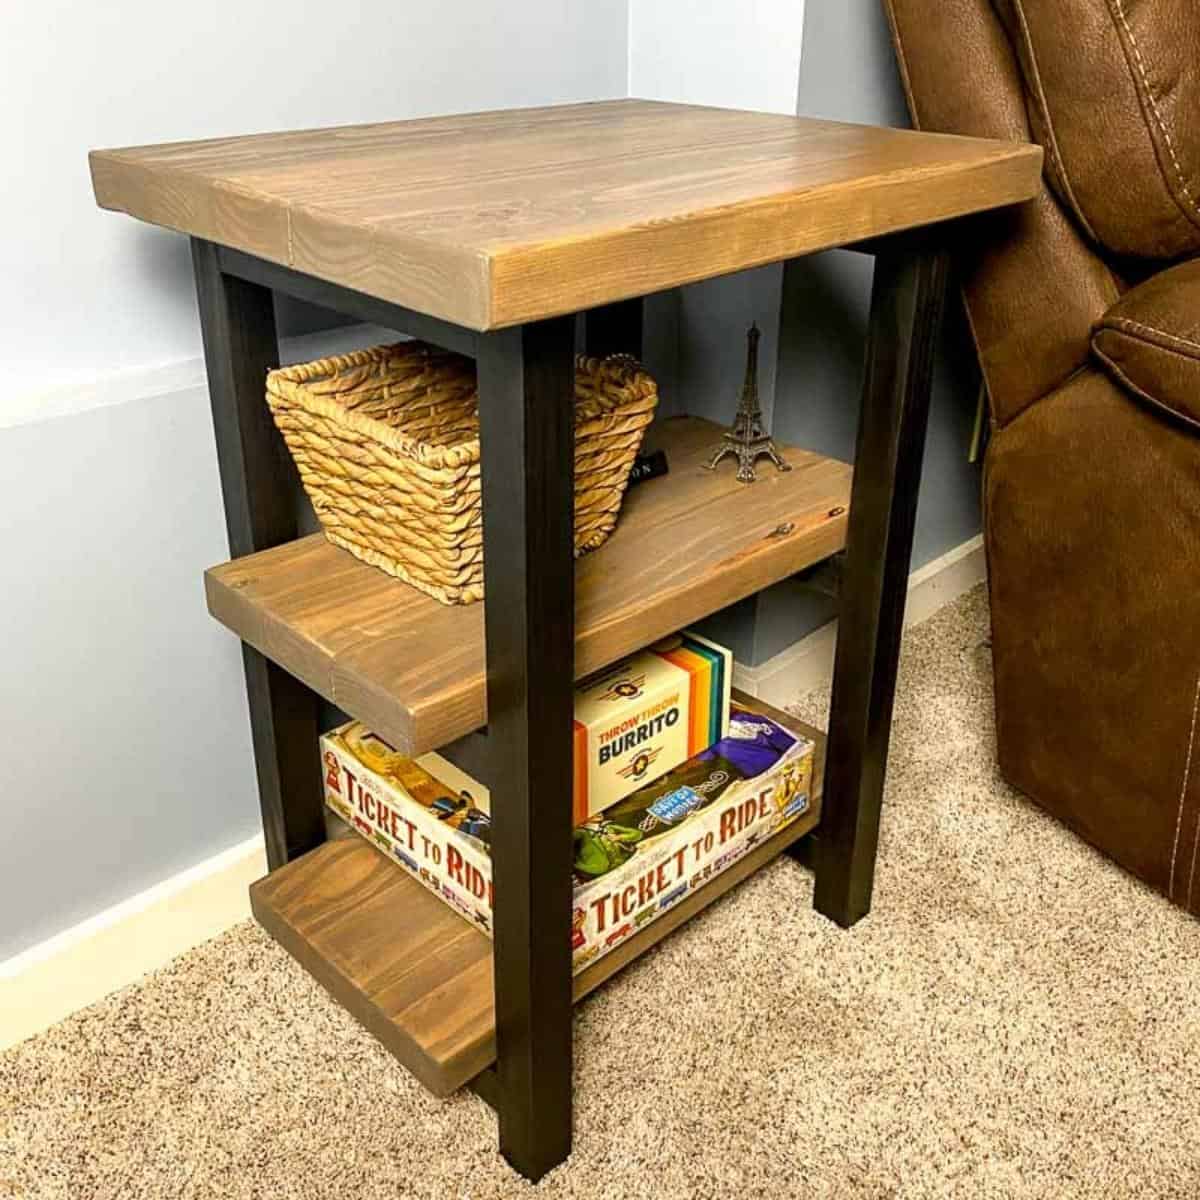 Build a Simple Reclaimed Wood Table  Reclaimed wood projects furniture,  Wood table diy, Reclaimed wood table